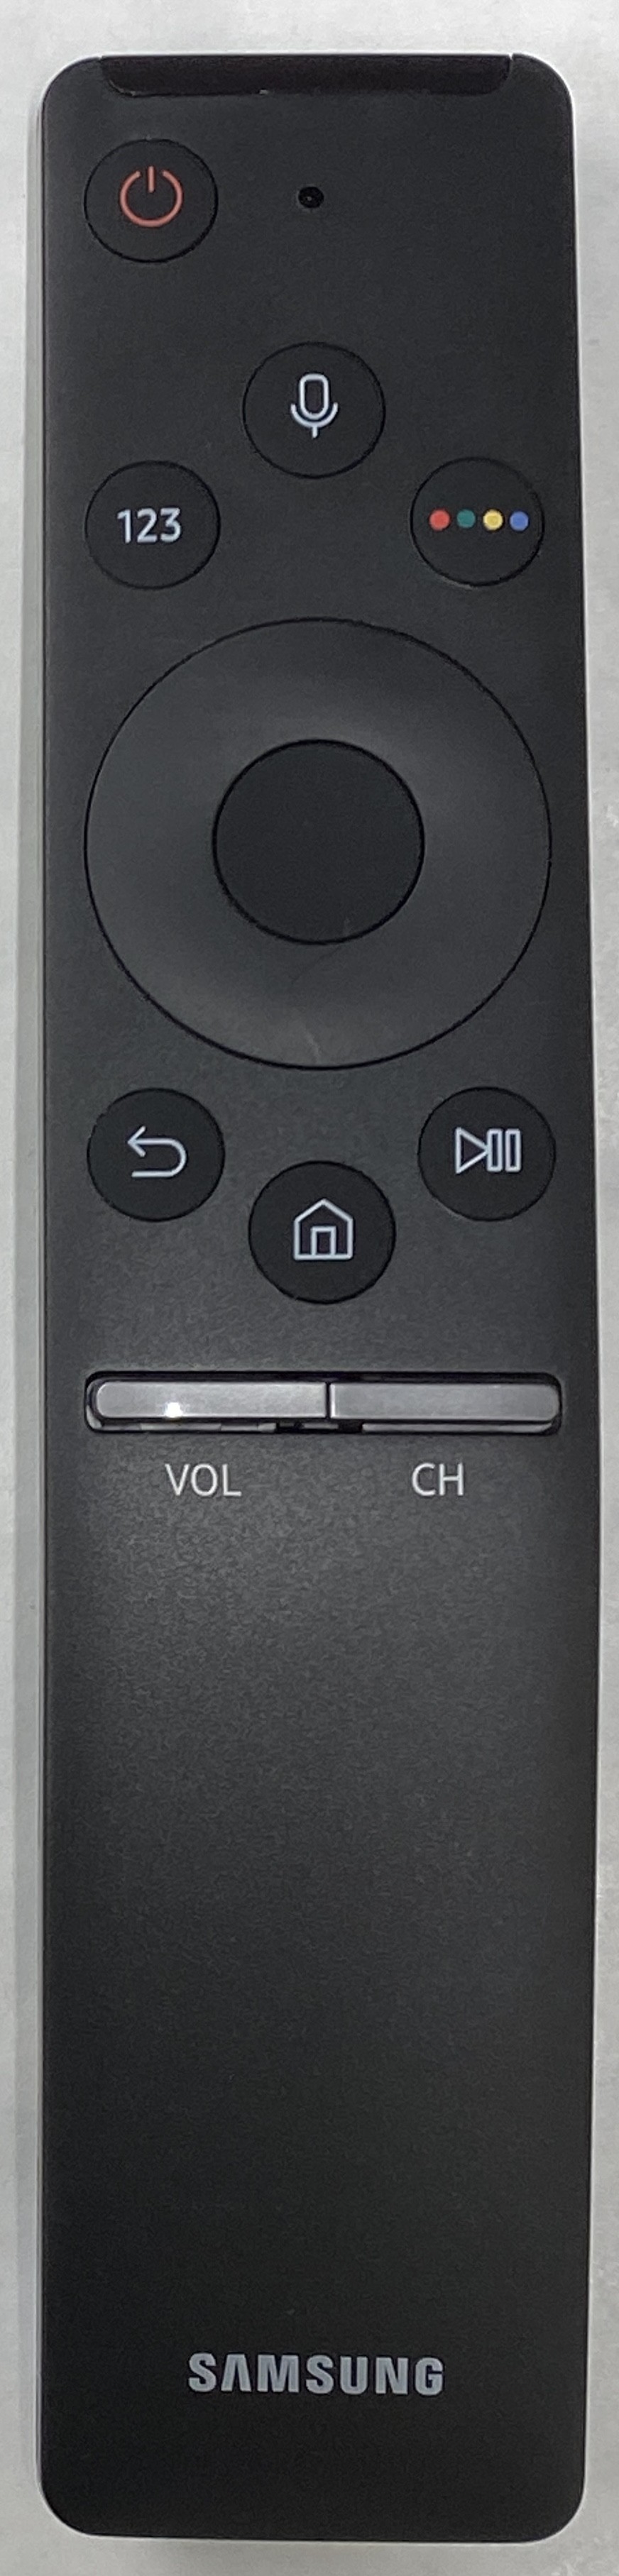 SAMSUNG UE49KS9000T Smart Remote Control Original